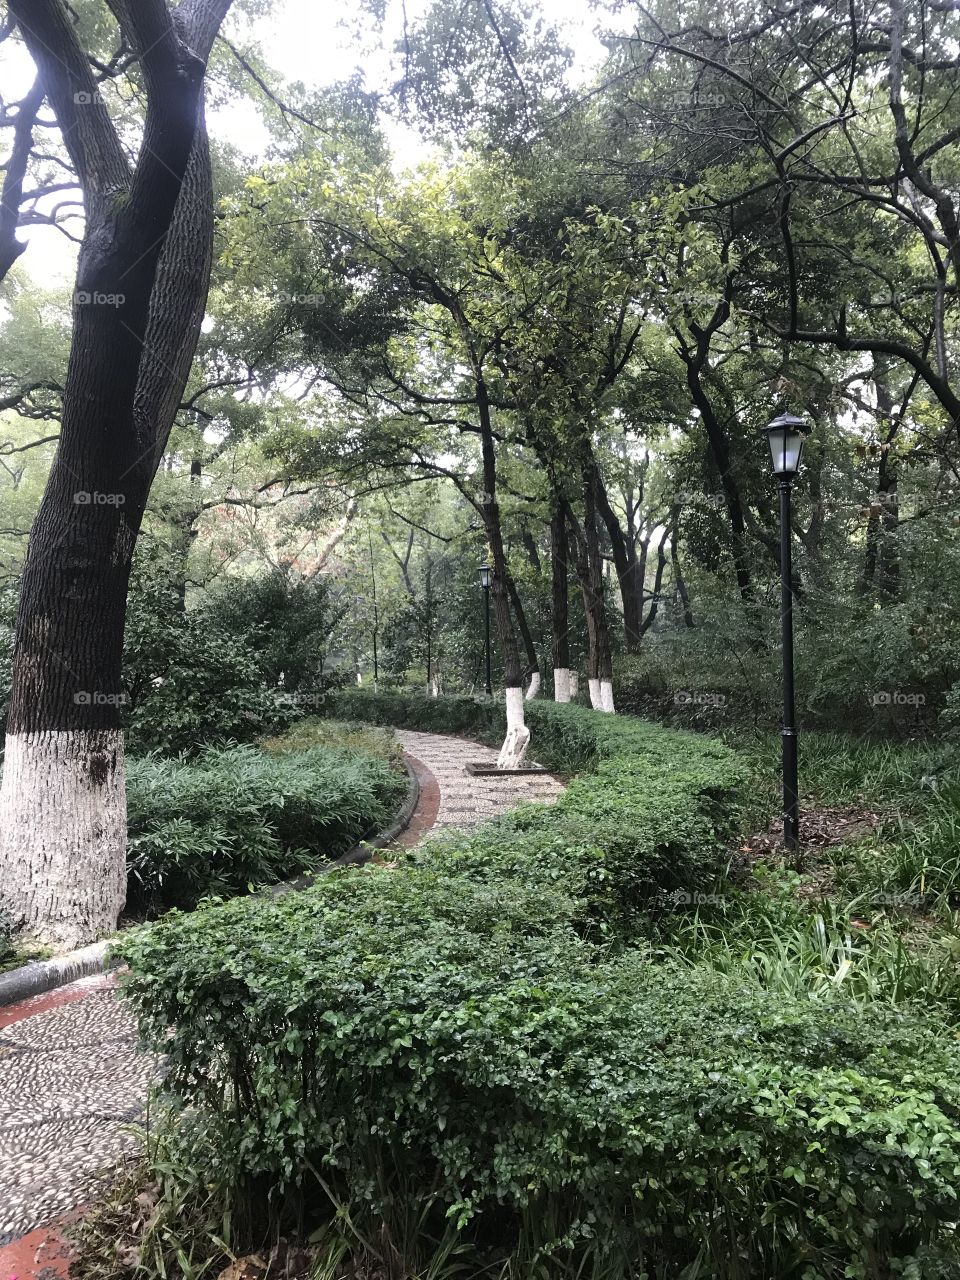 Footpath through a park in China 